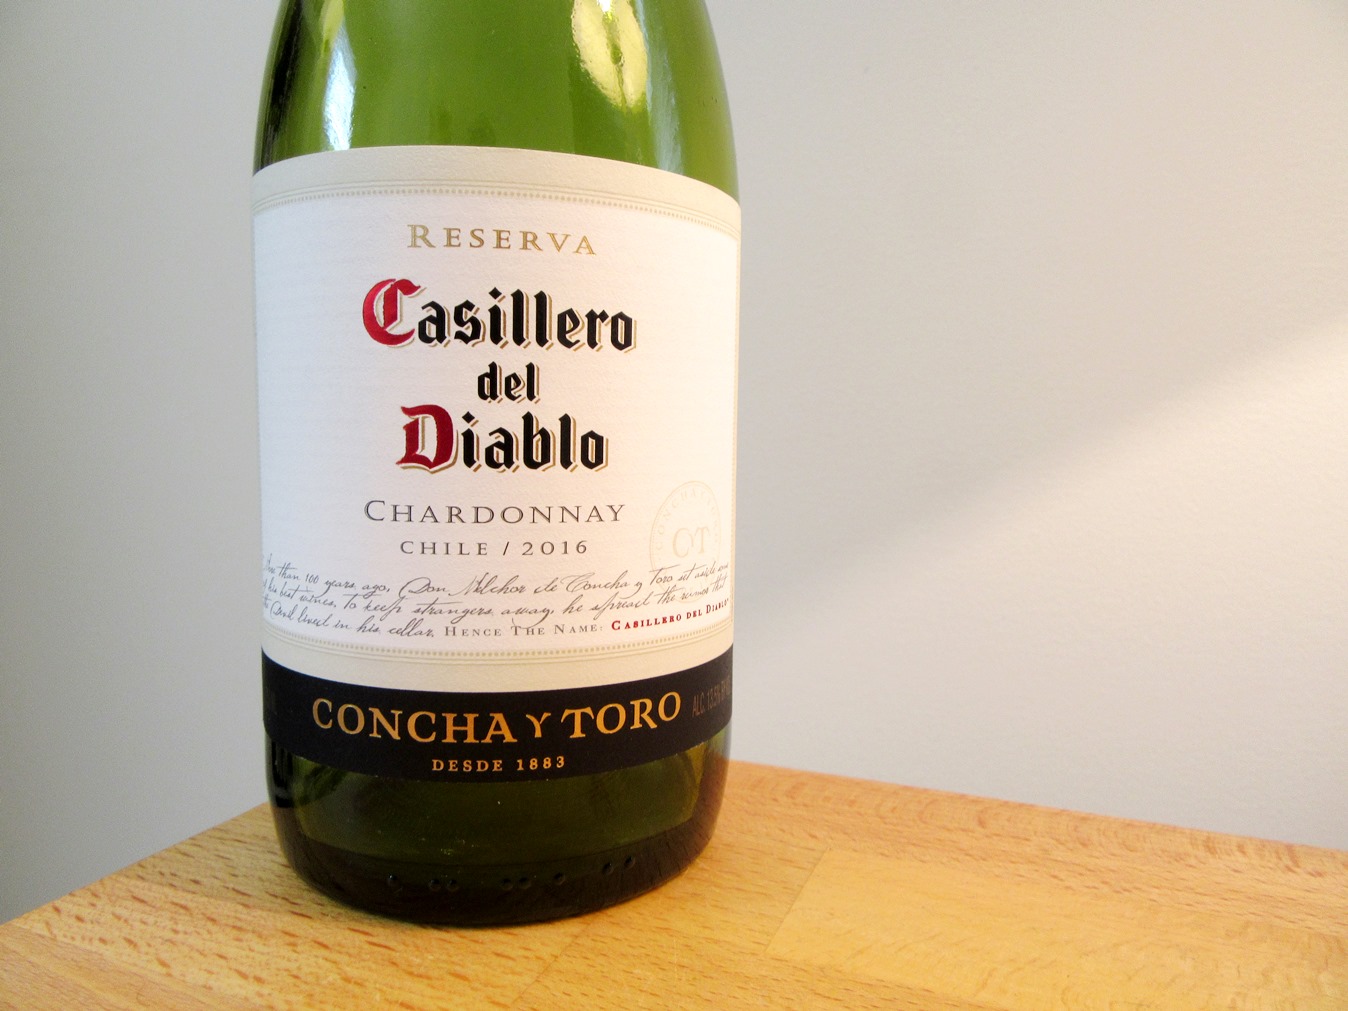 Concha Y Toro, Casillero del Diablo, Reserva Chardonnay 2016, Chile, Wine Casual